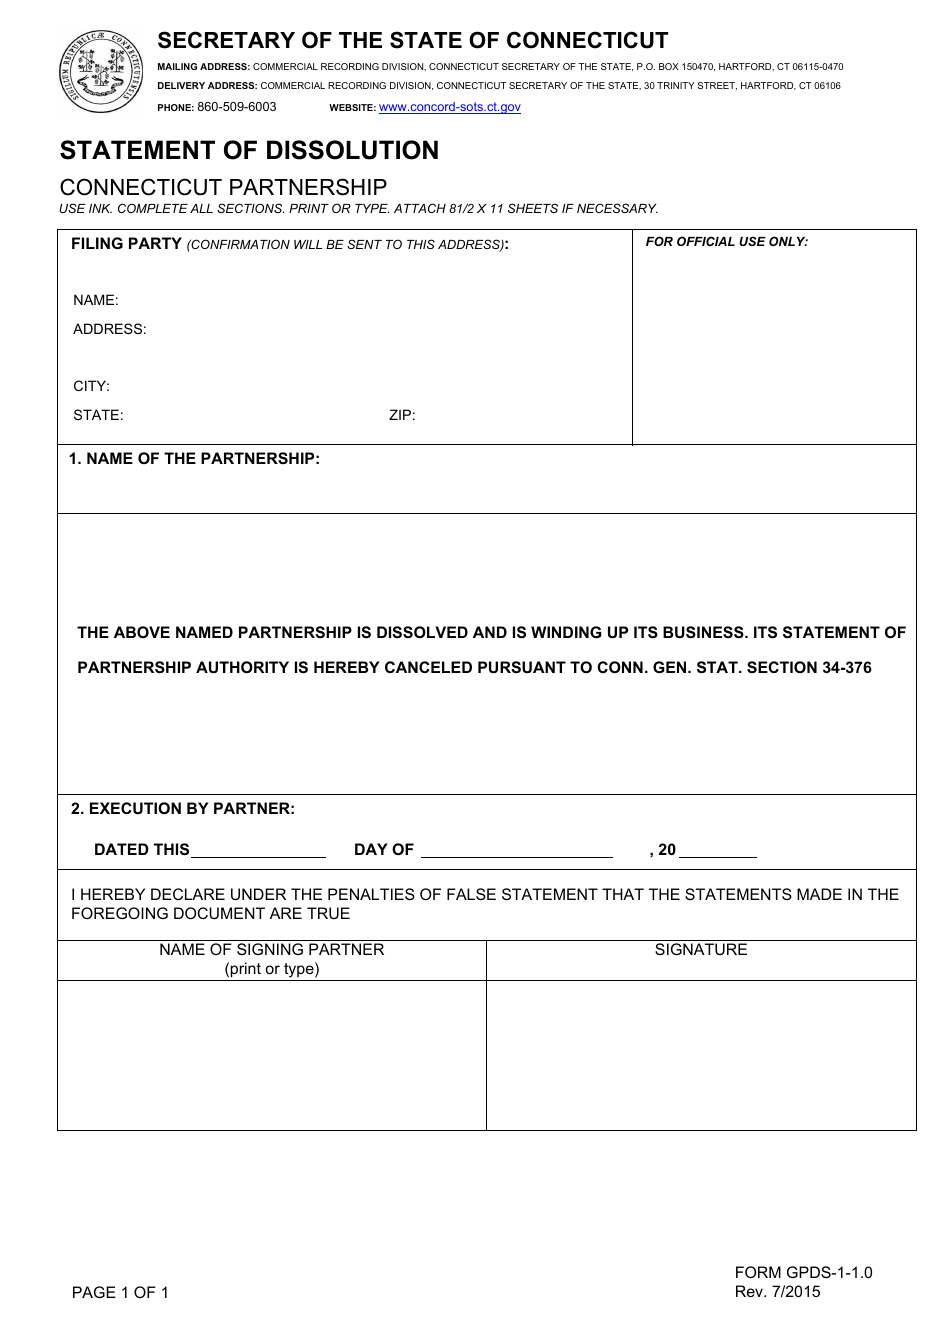 Form GPDS-1-1.0 Statement of Dissolution - Connecticut Partnership - Connecticut, Page 1